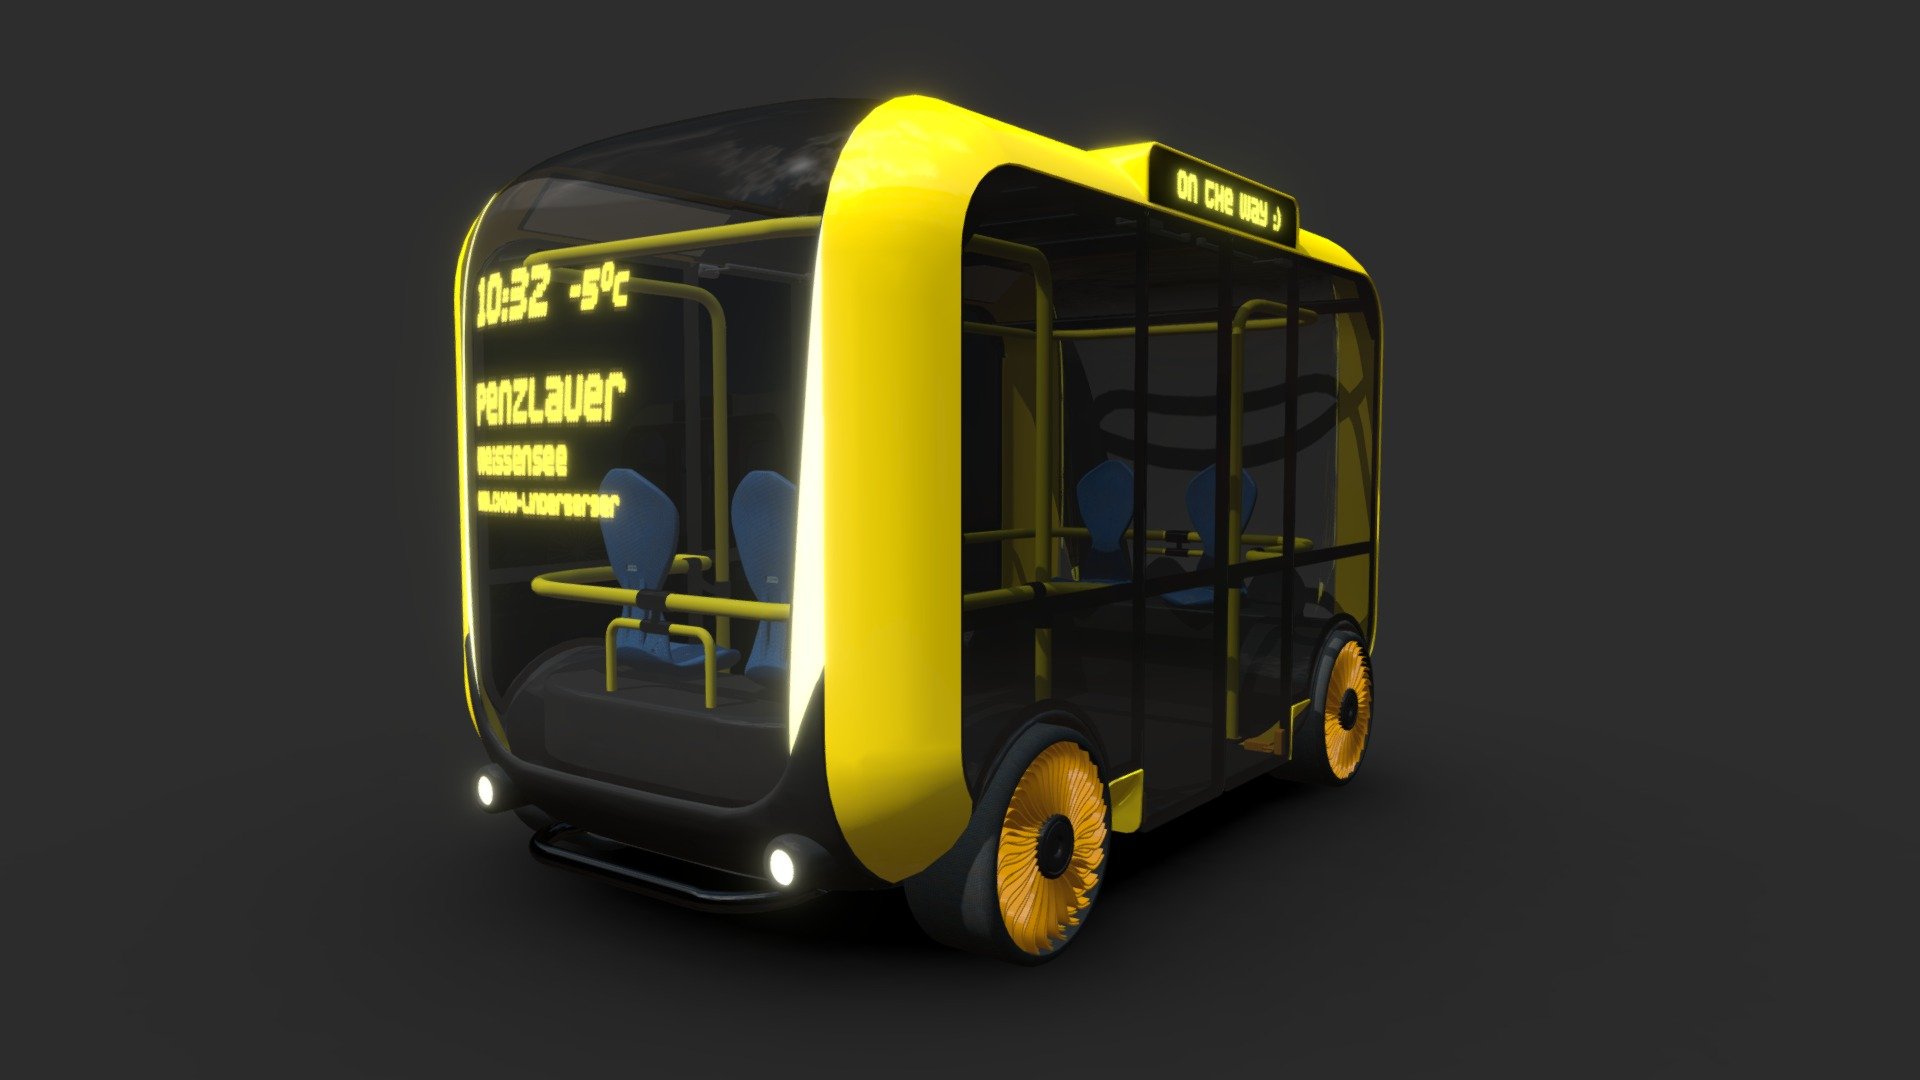 Berlino. Smart mini-bus system